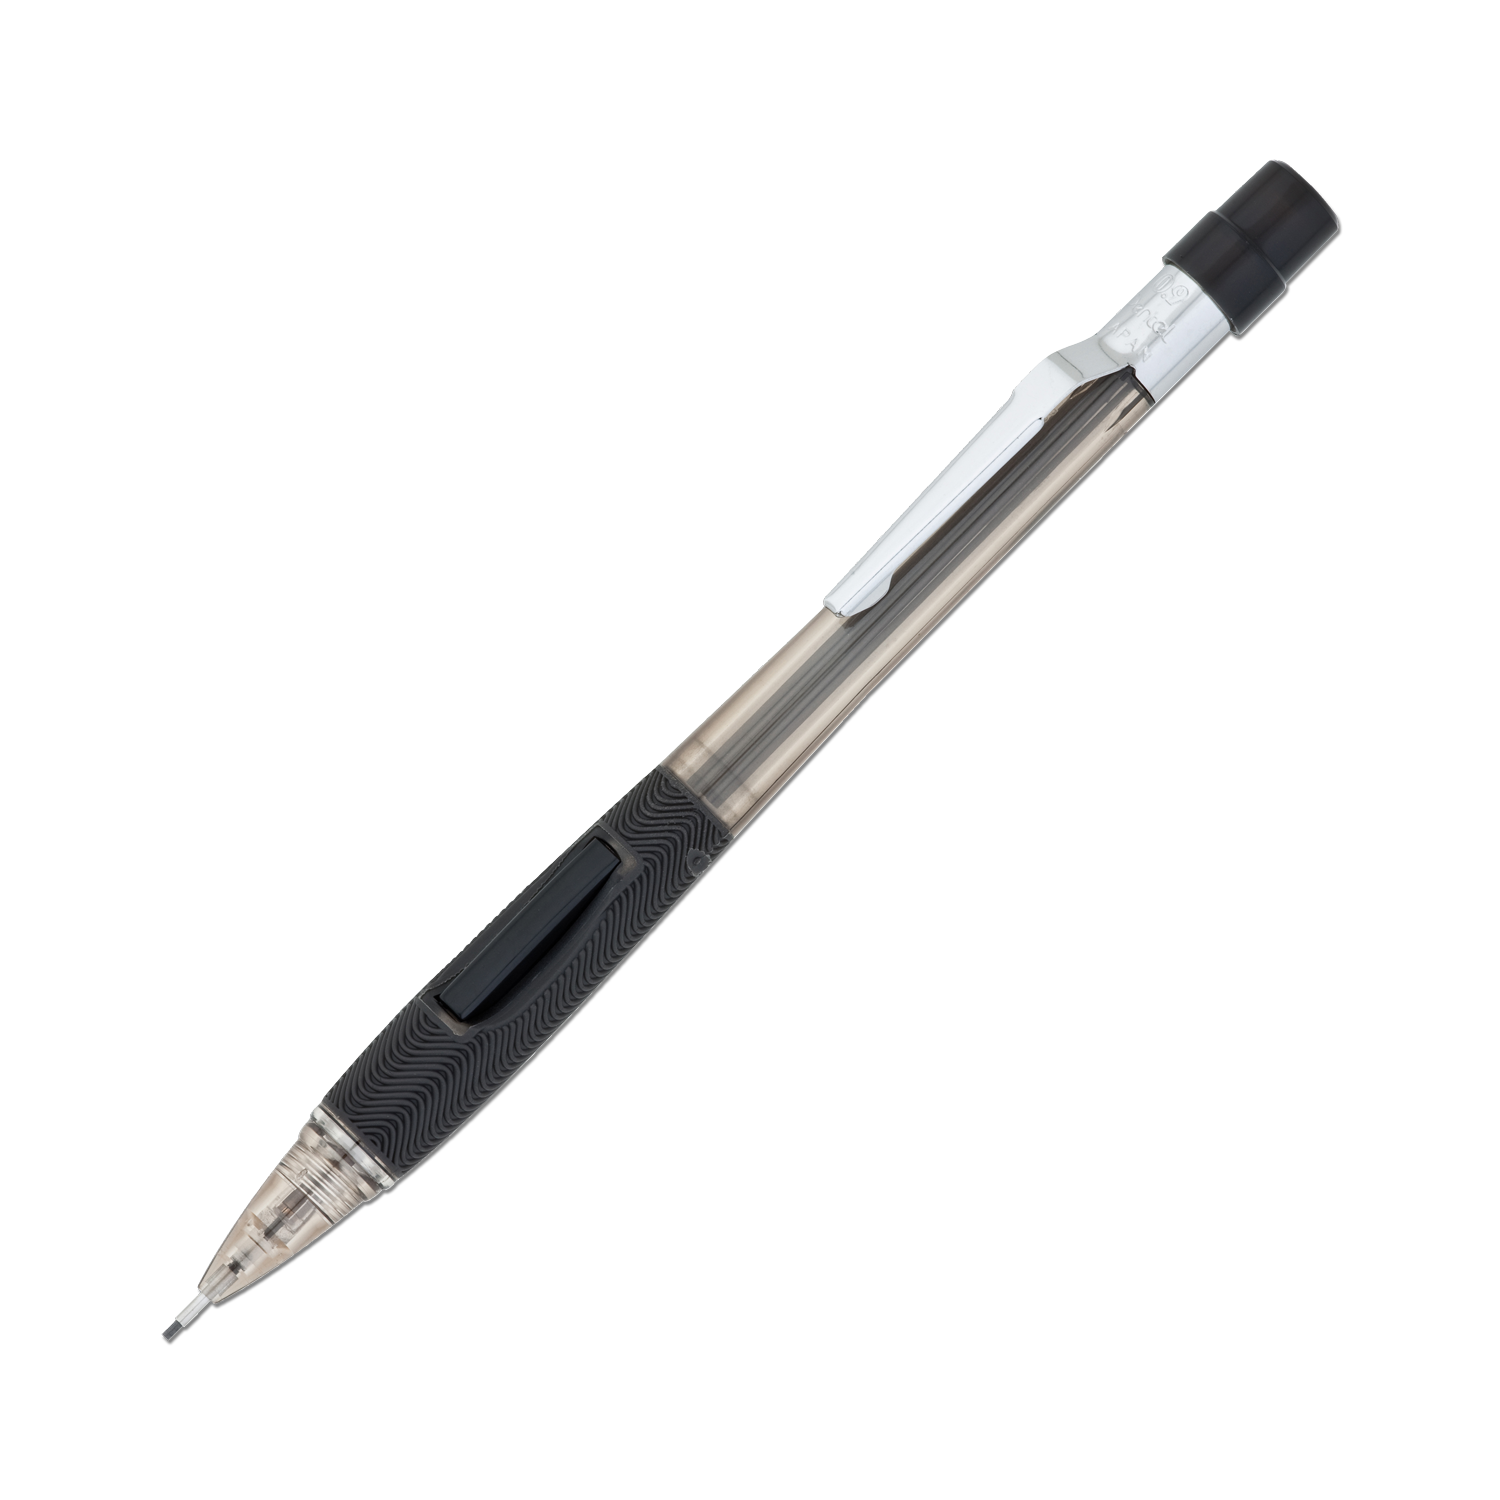 Pentel Mechanical Clic Eraser Pen Style CLICKER Retractable Thin Choose  Colors